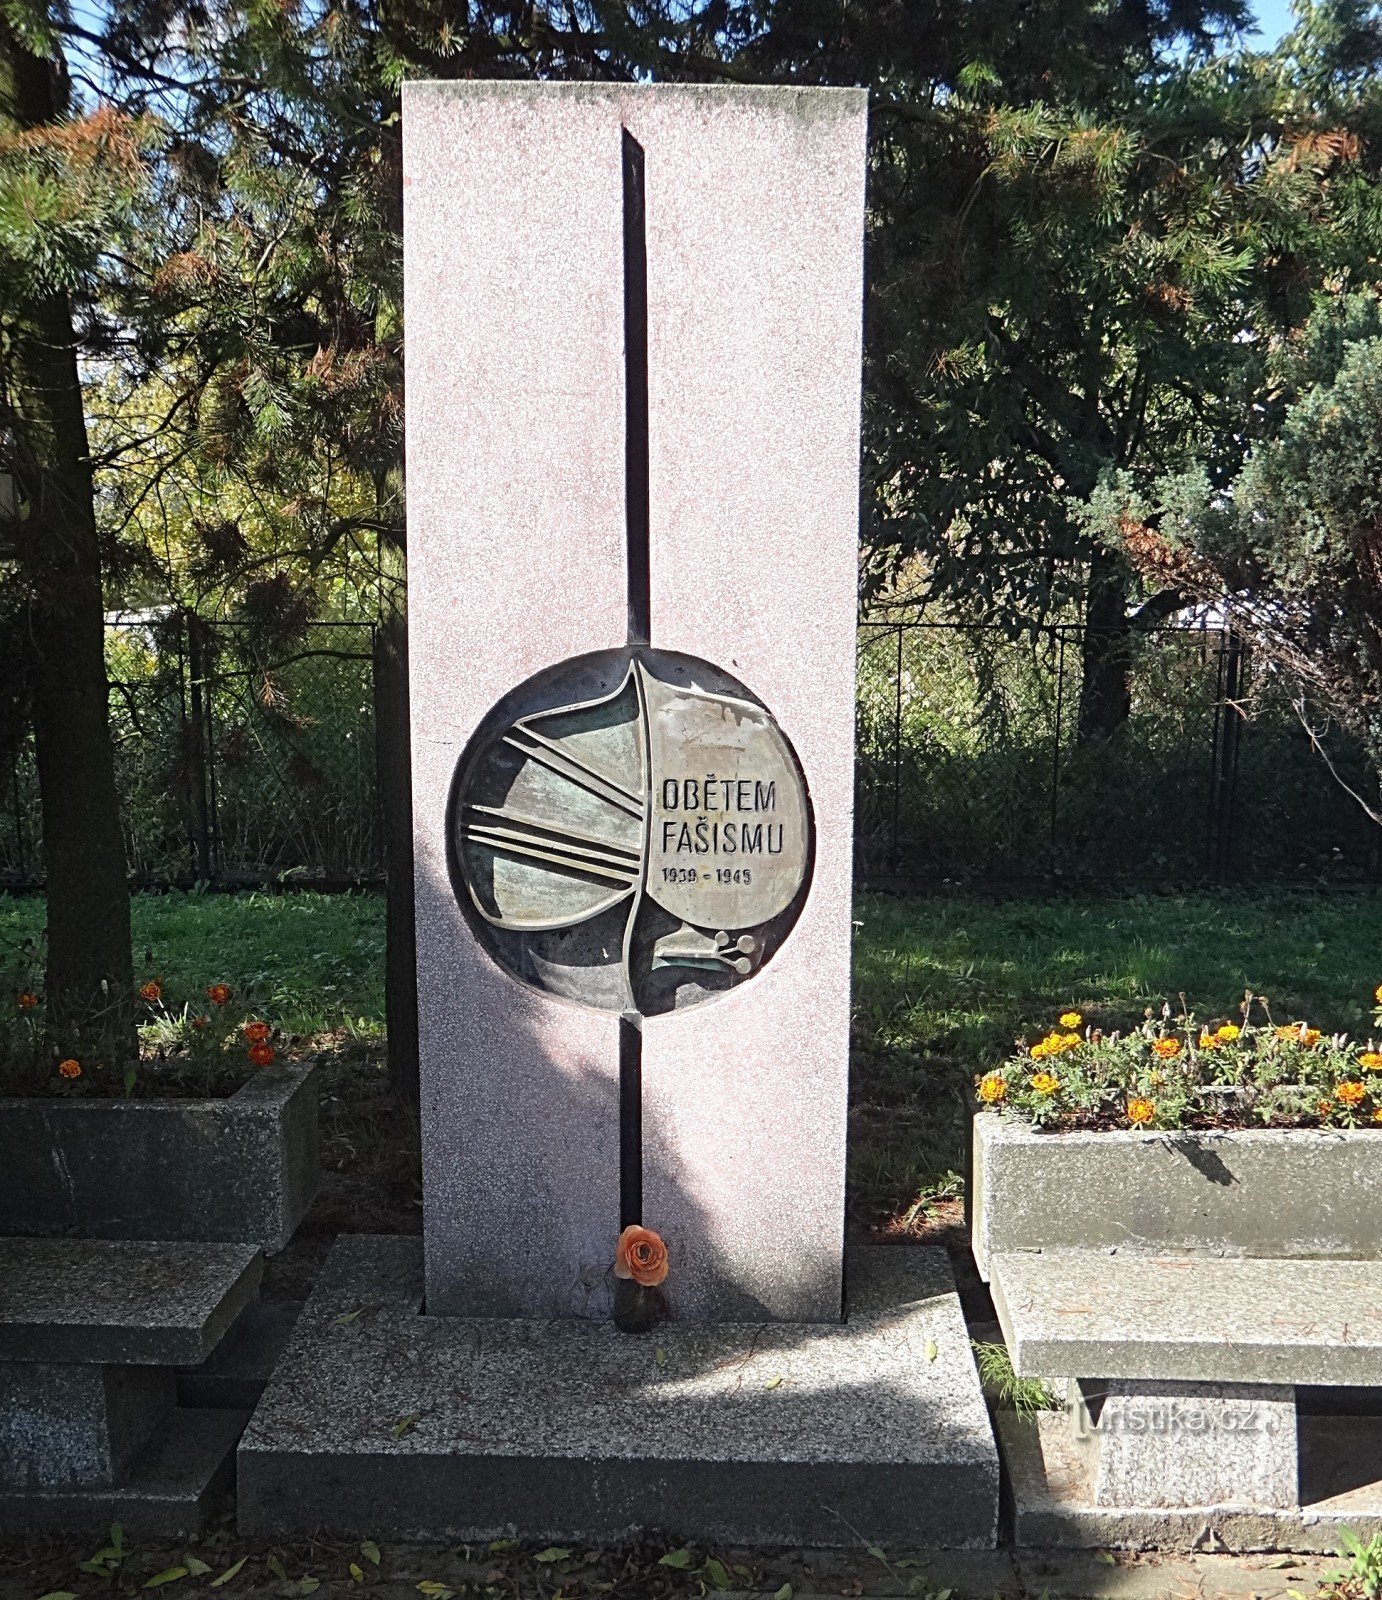 Věřňovice emlékmű a fasizmus áldozatainak